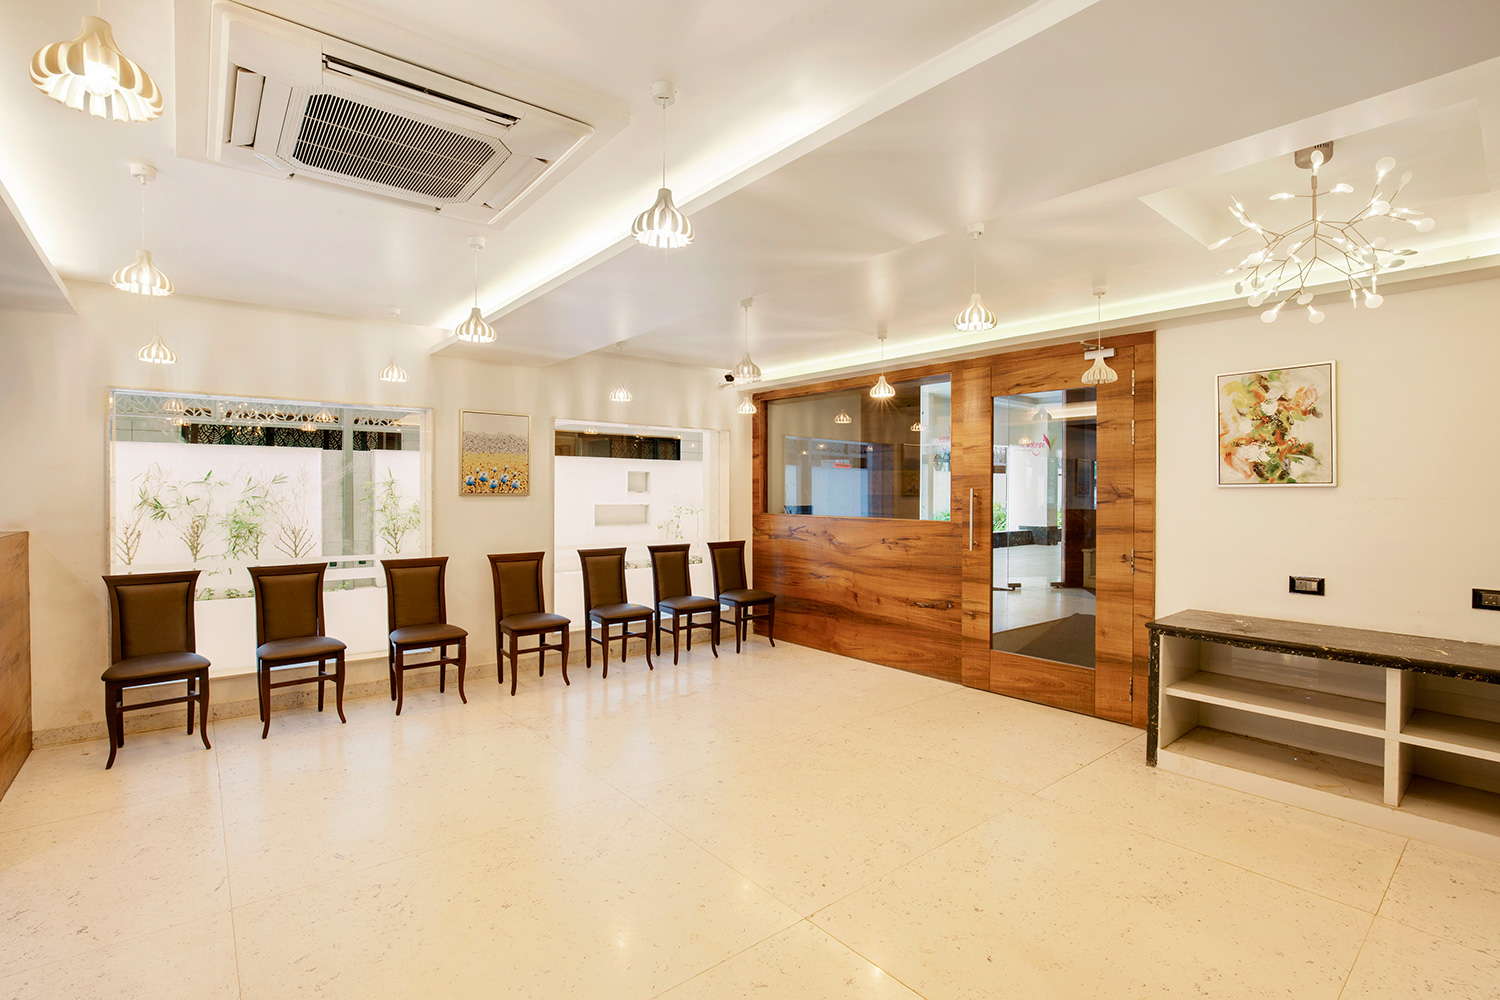 Best hotels in coimbatore near Railway station|Vinayak IN